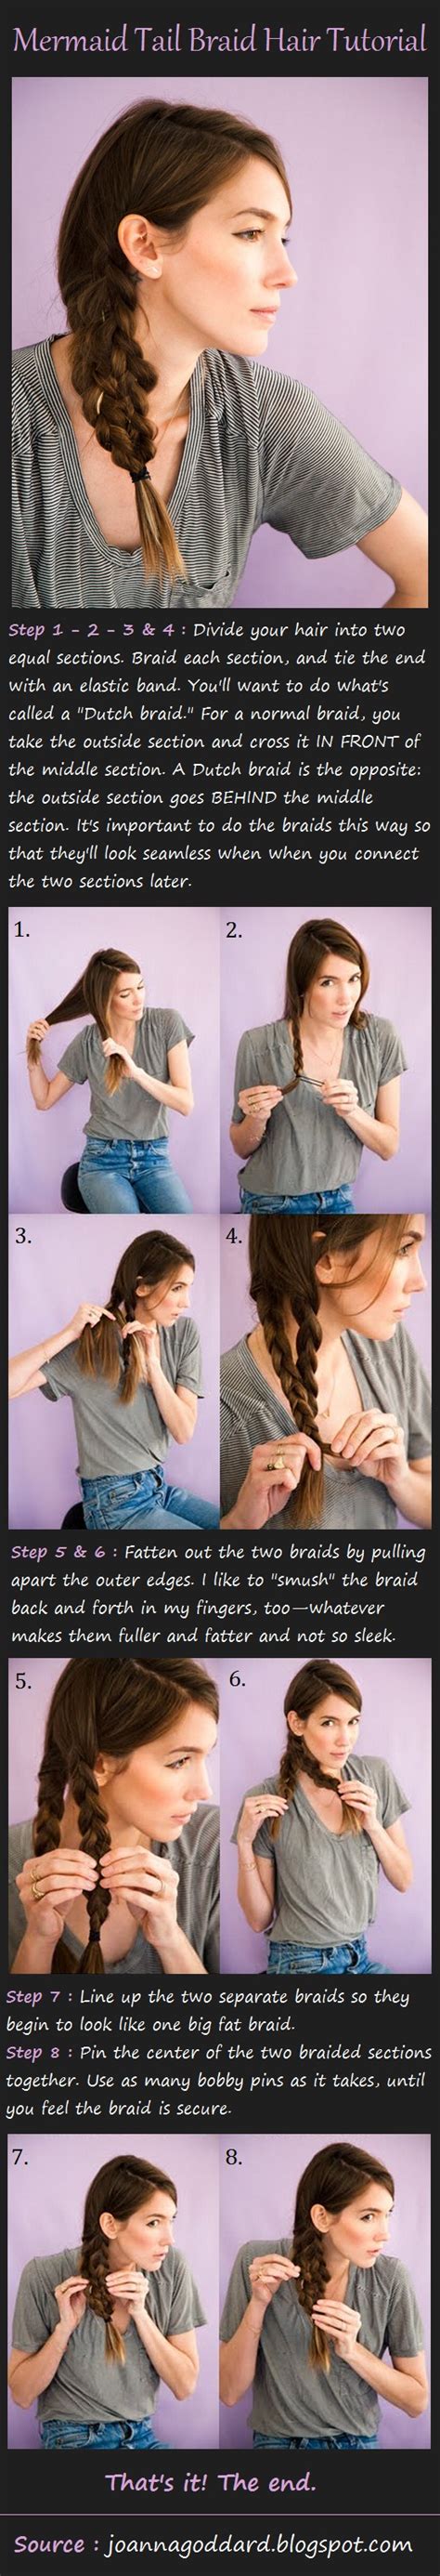 beauty tutorials hair tutorials mermaid tail braids